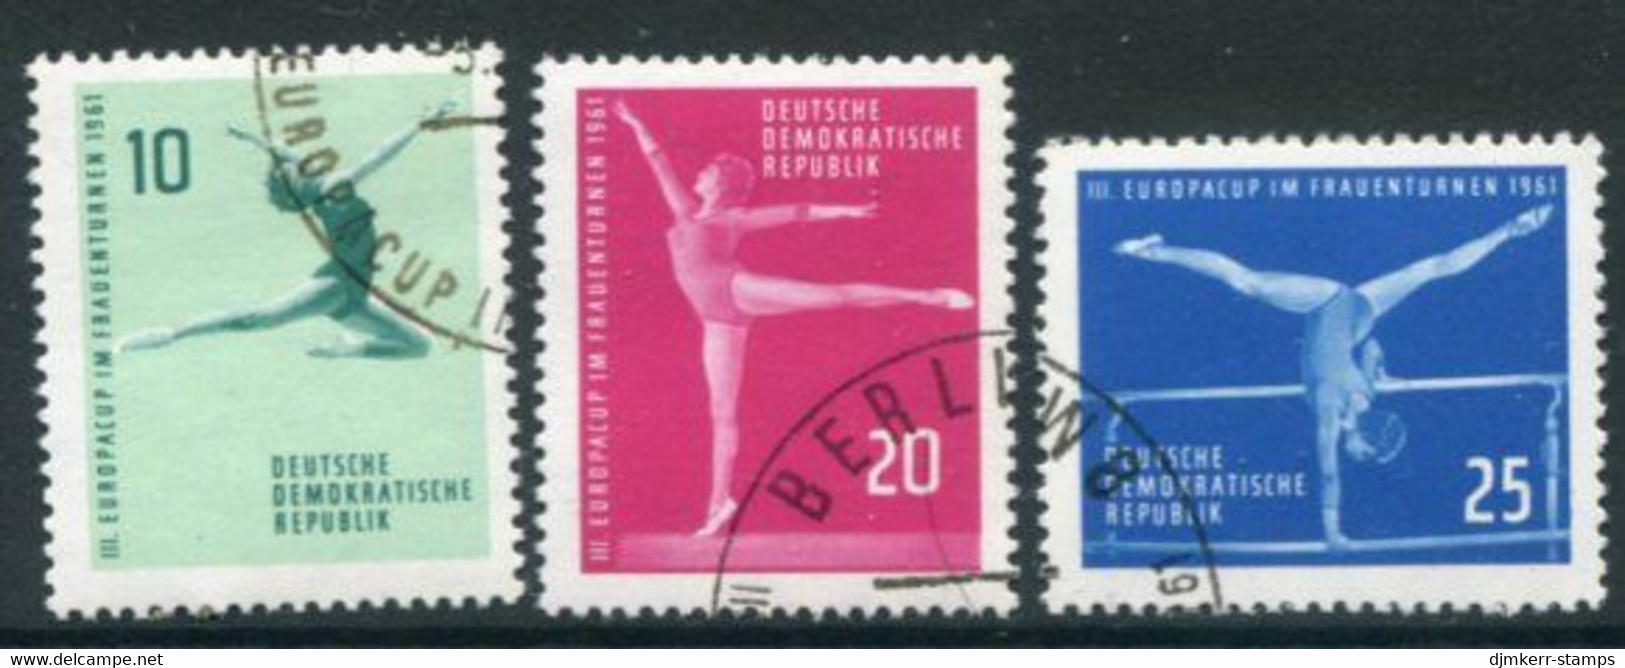 DDR / E. GERMANY 1961 Women's Gymnastics Used  Michel  830-32 - Usados